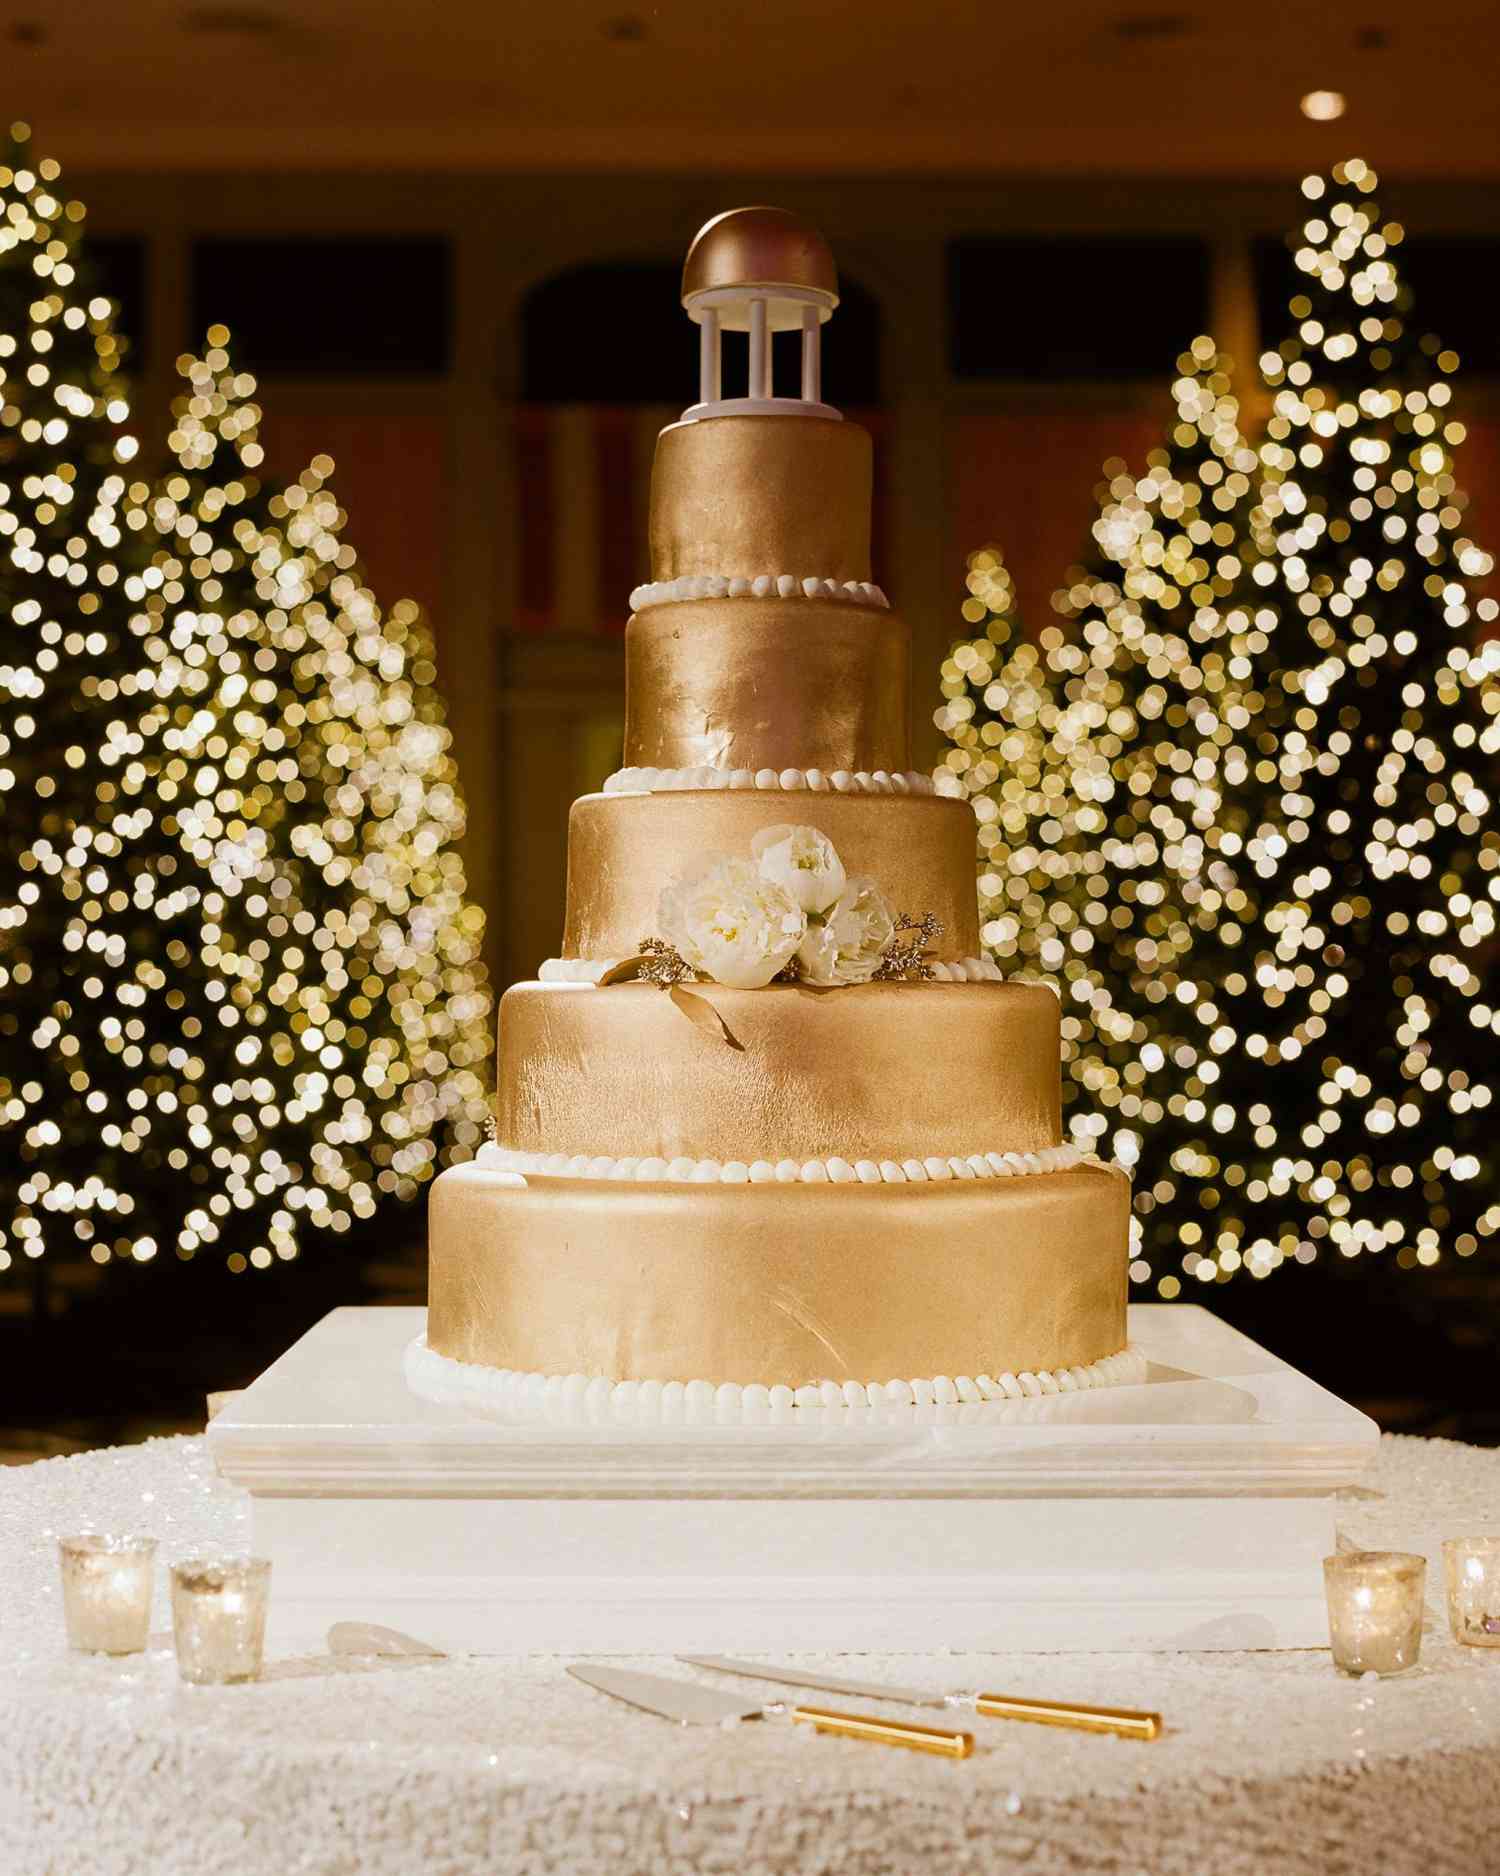 paige-michael-wedding-cake-0947-s112431-1215.jpg